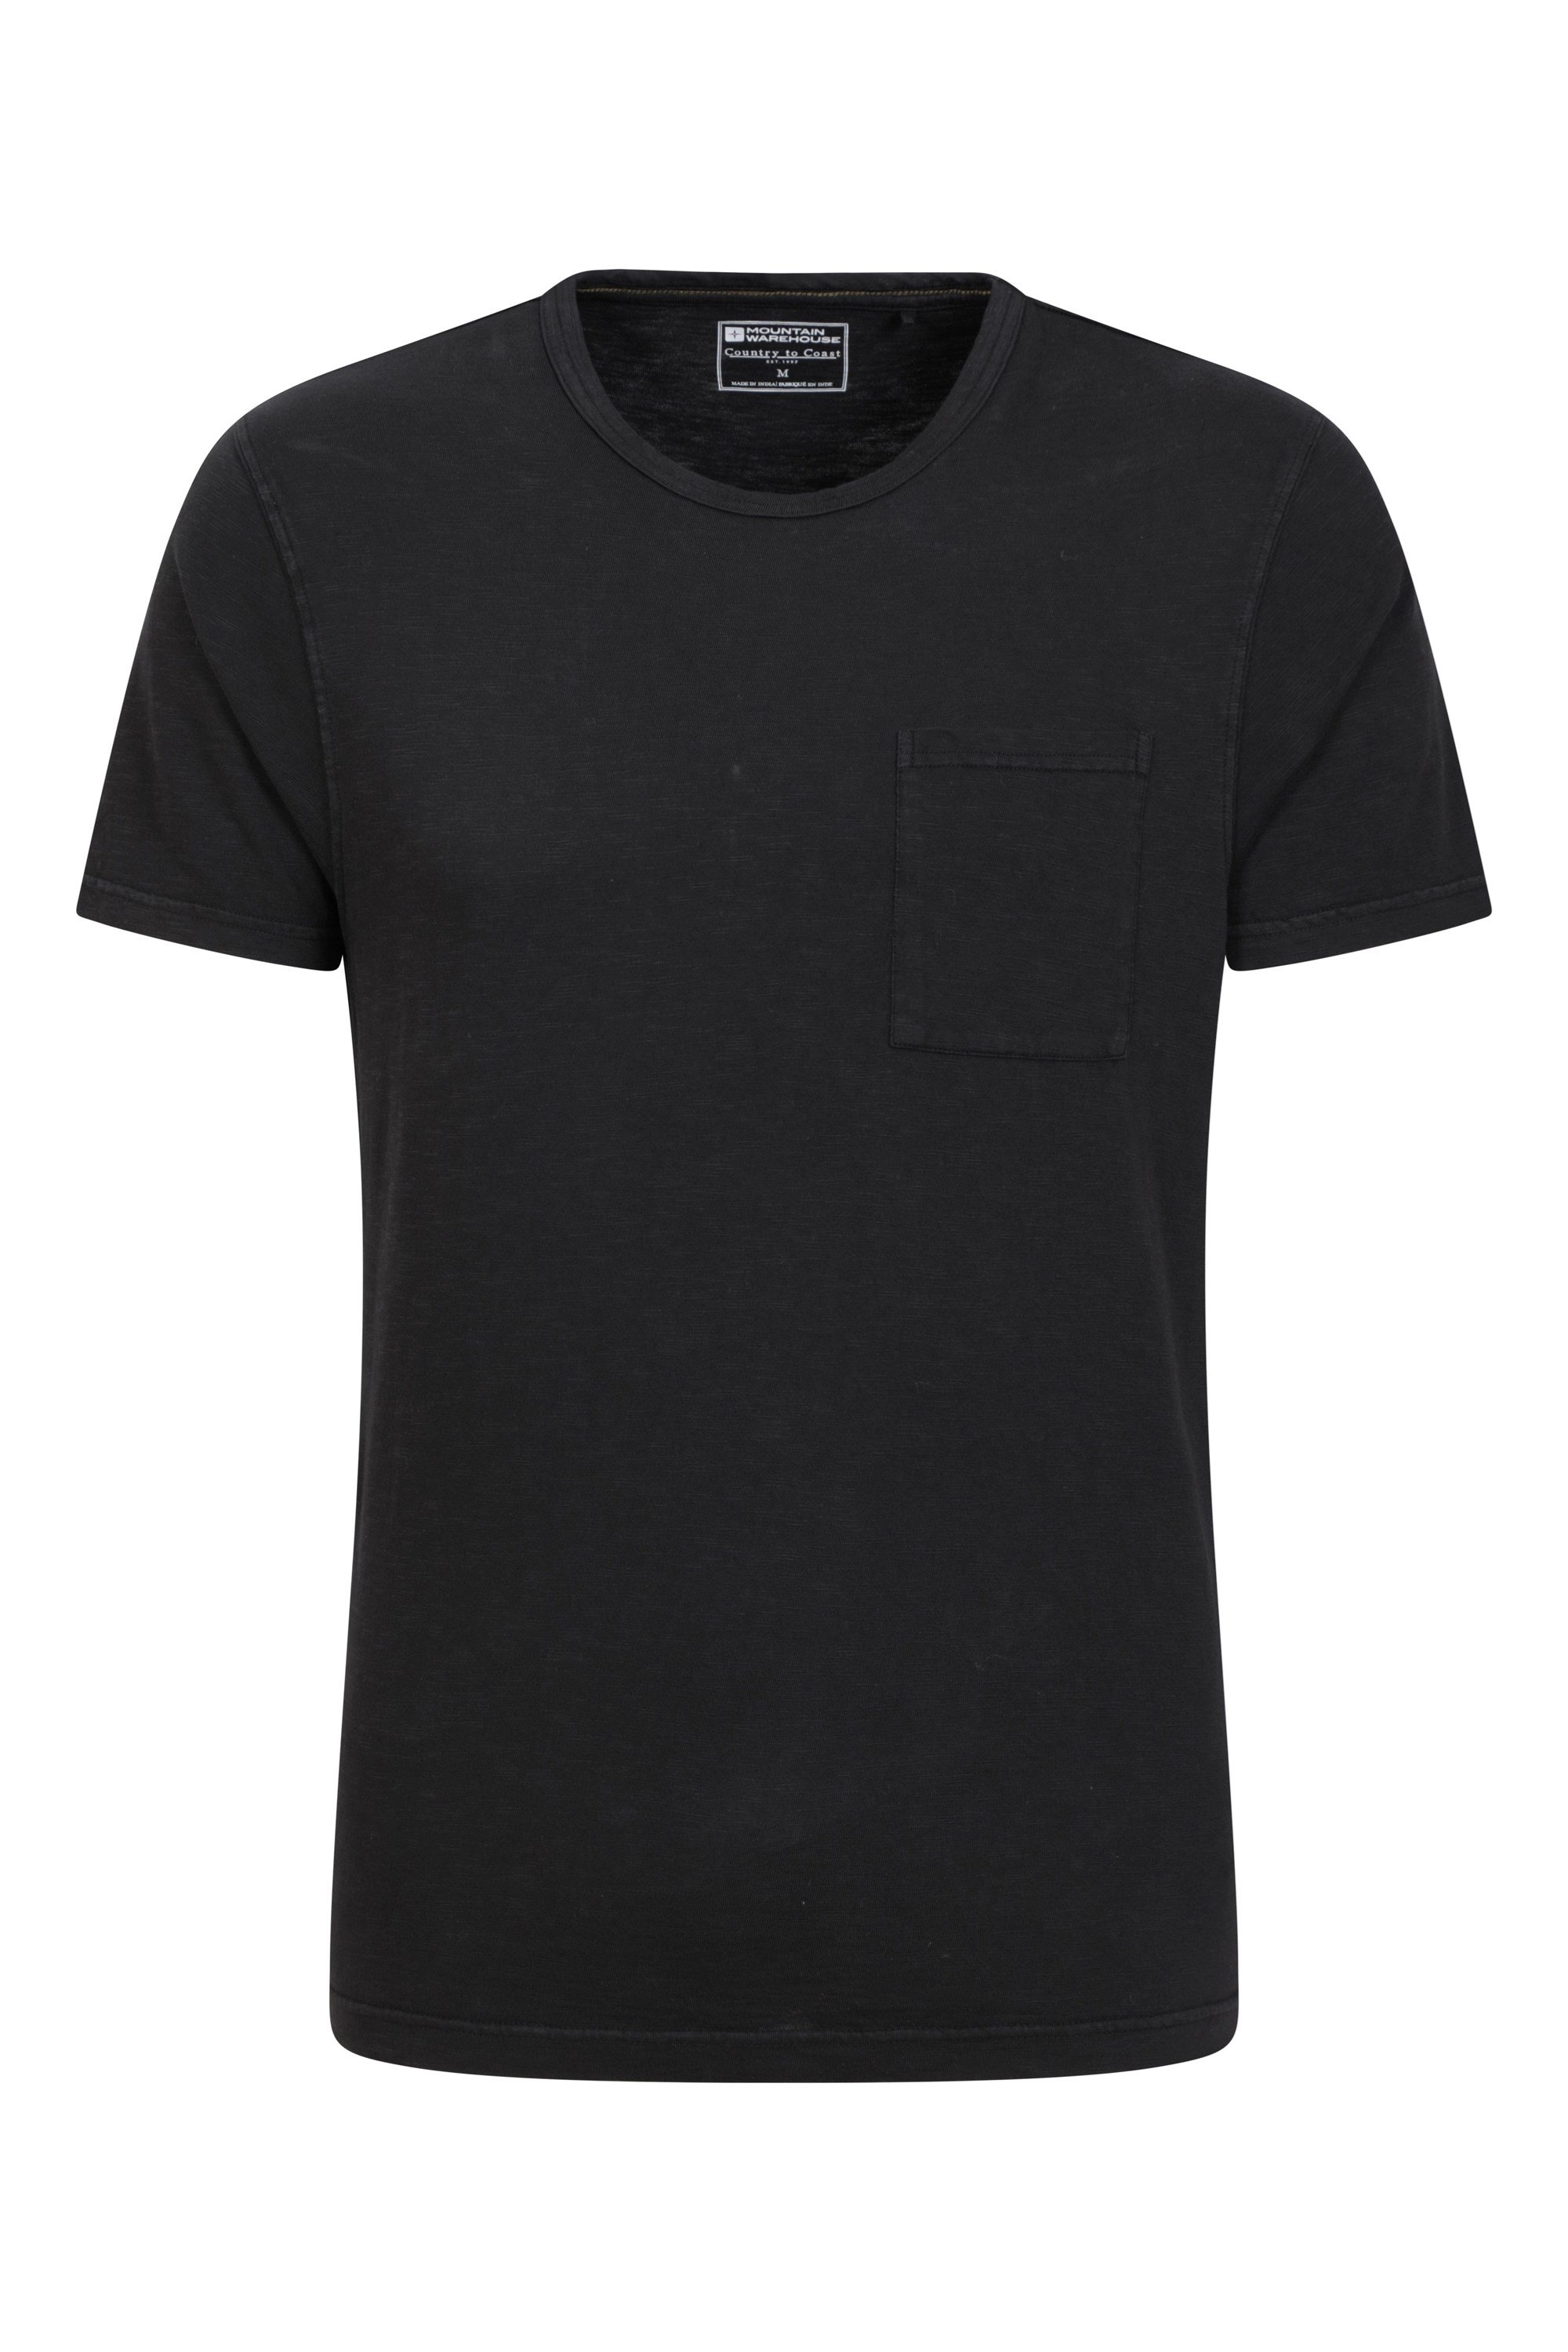 Fescue Mens Pocket T-shirt - Black